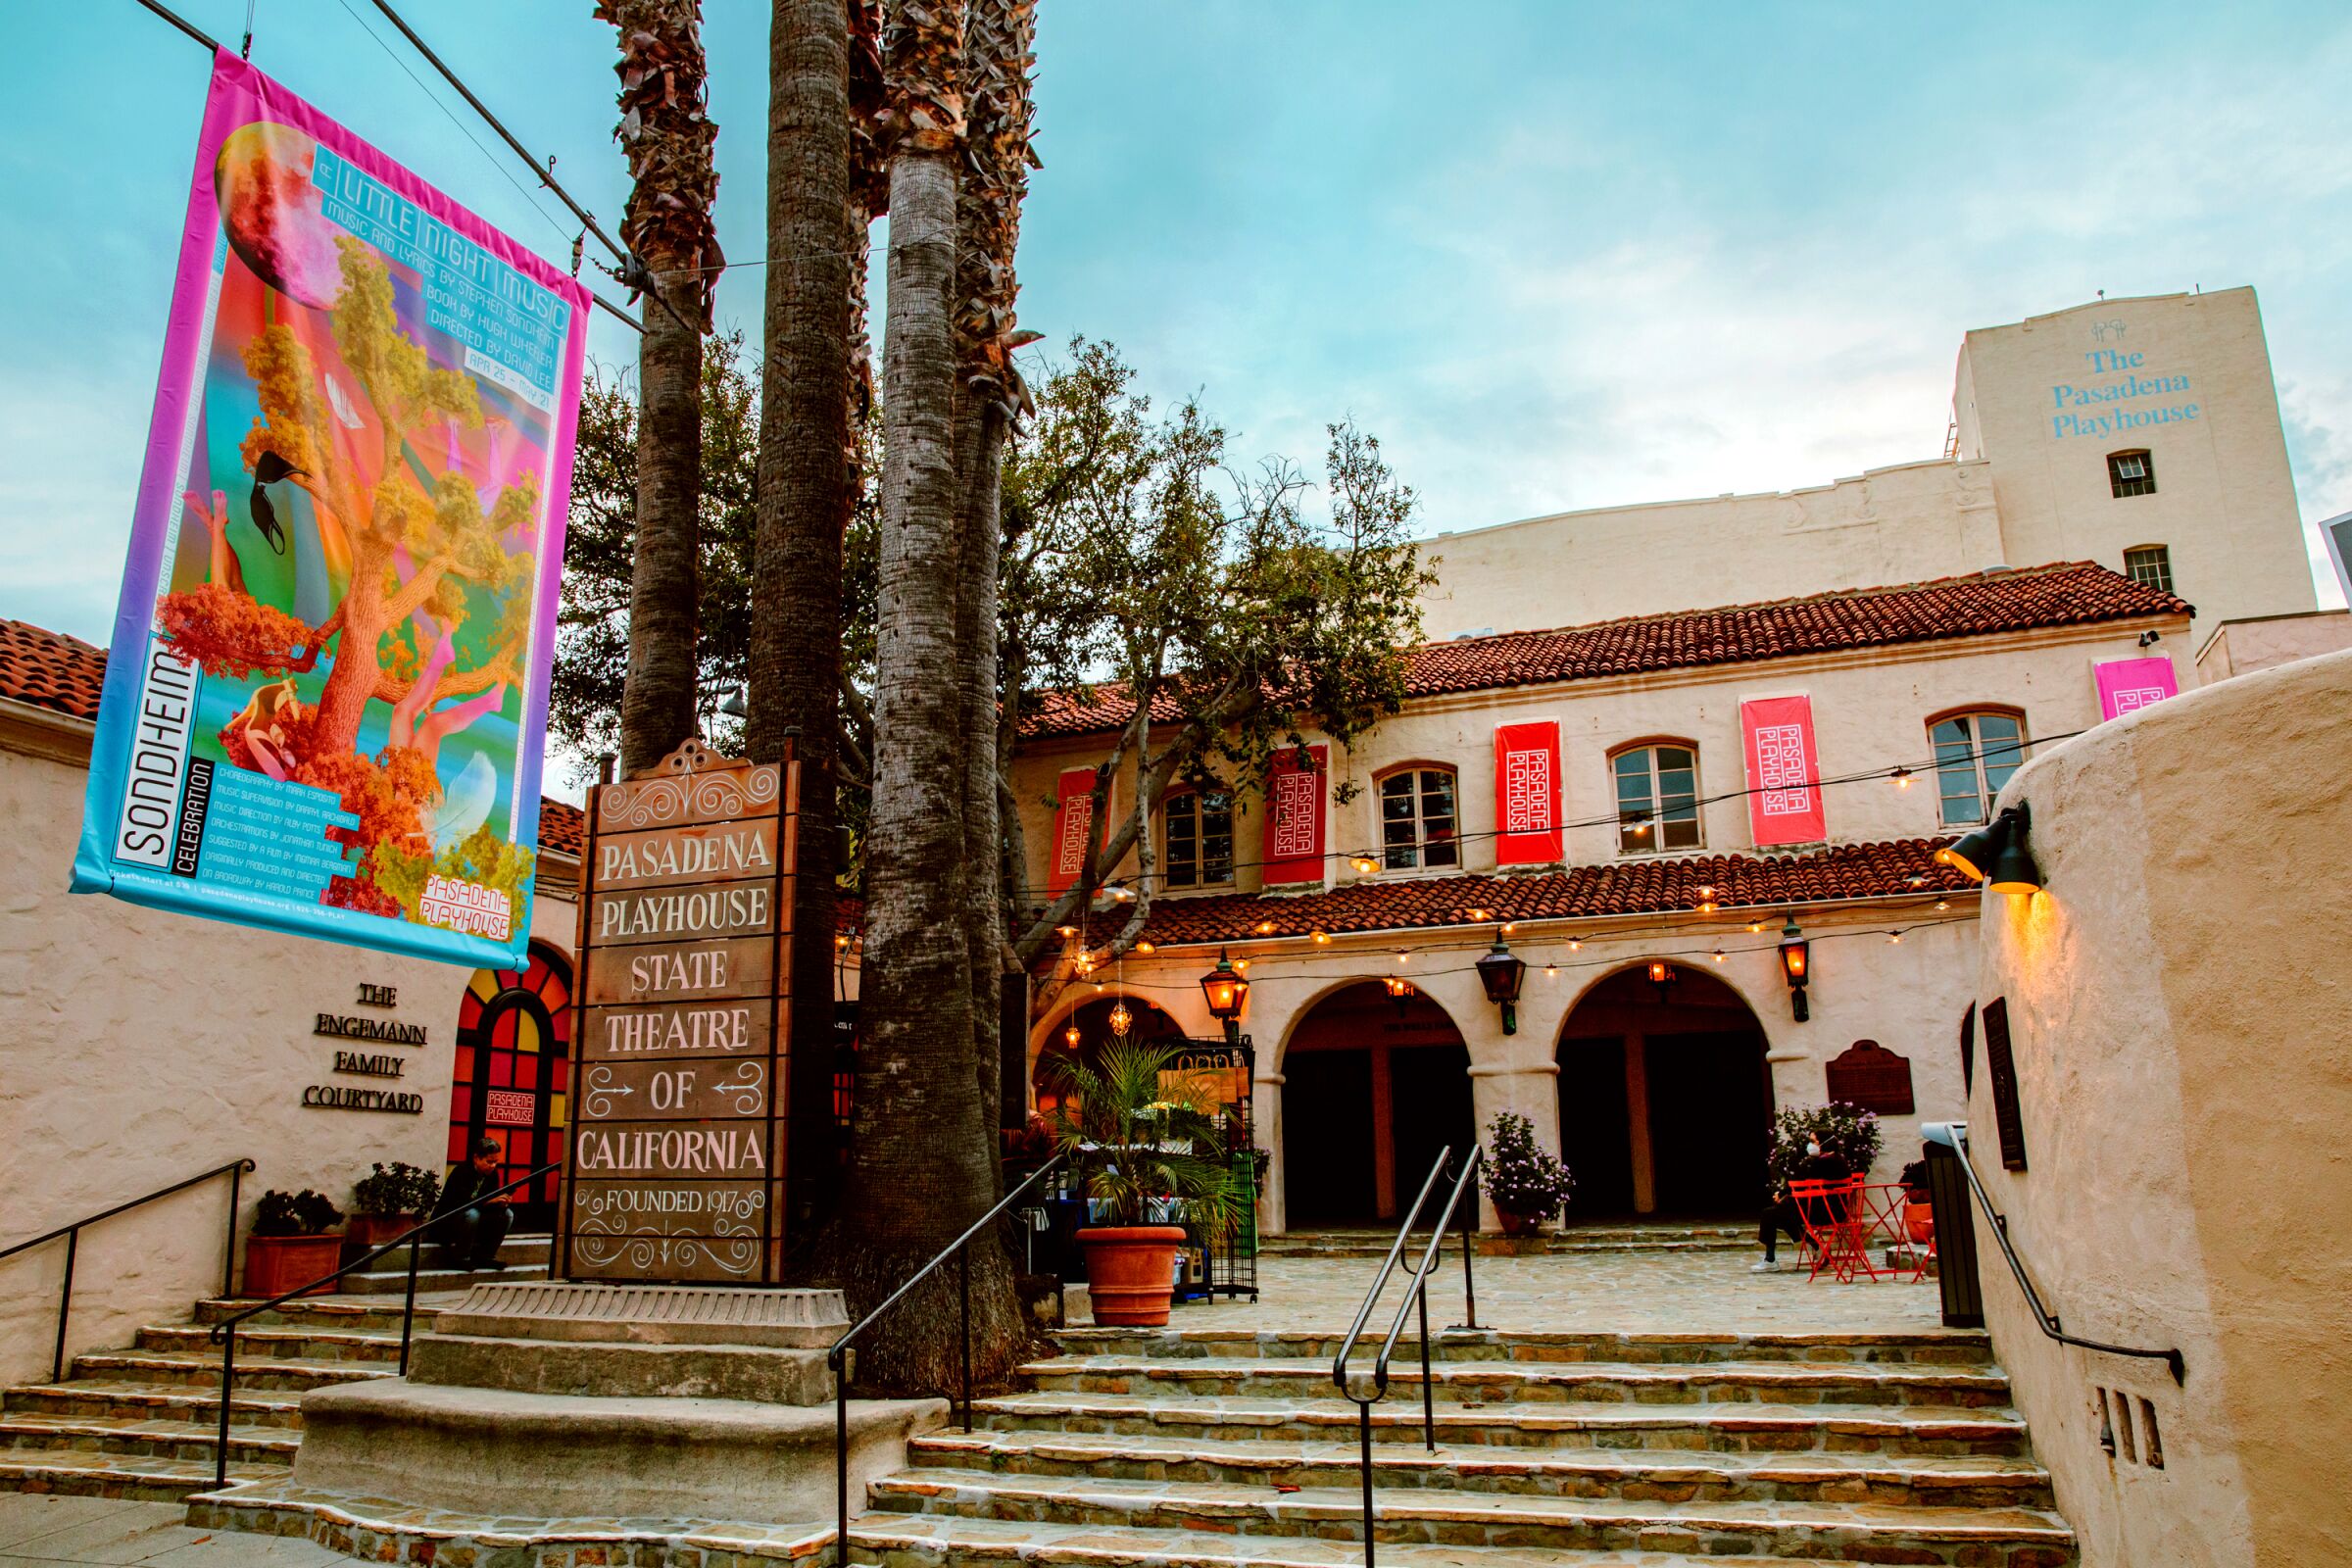 Front view of the Pasadena Playhouse.